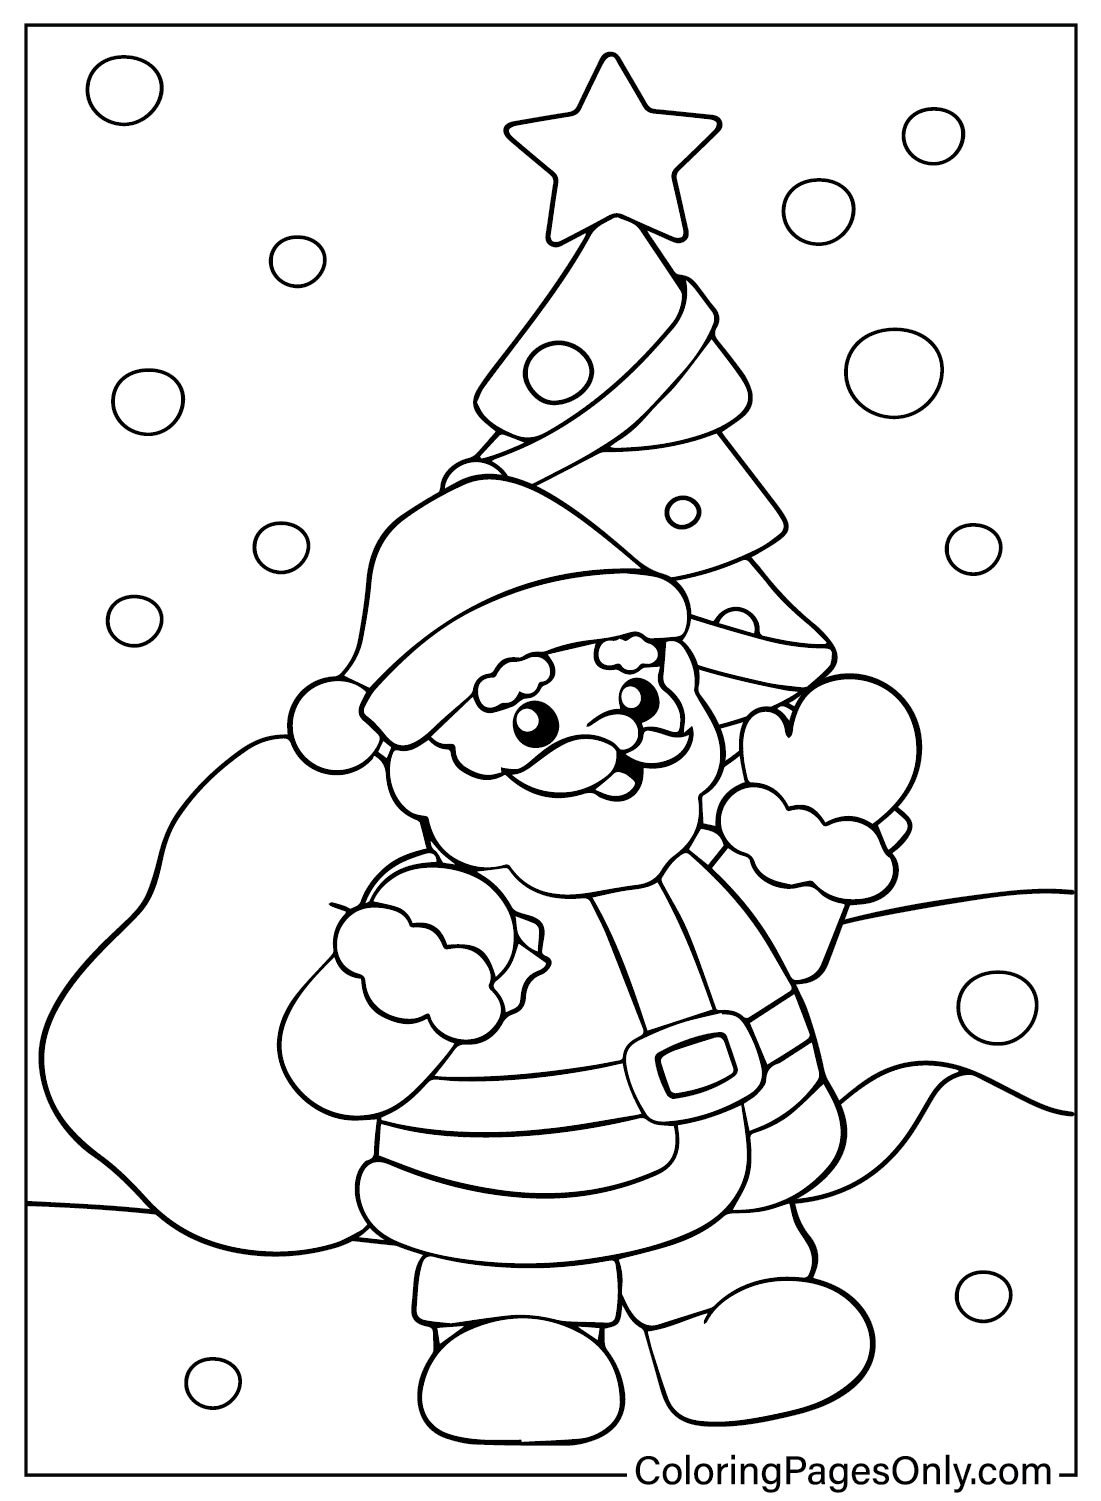 Página para colorir grátis do Papai Noel do Papai Noel